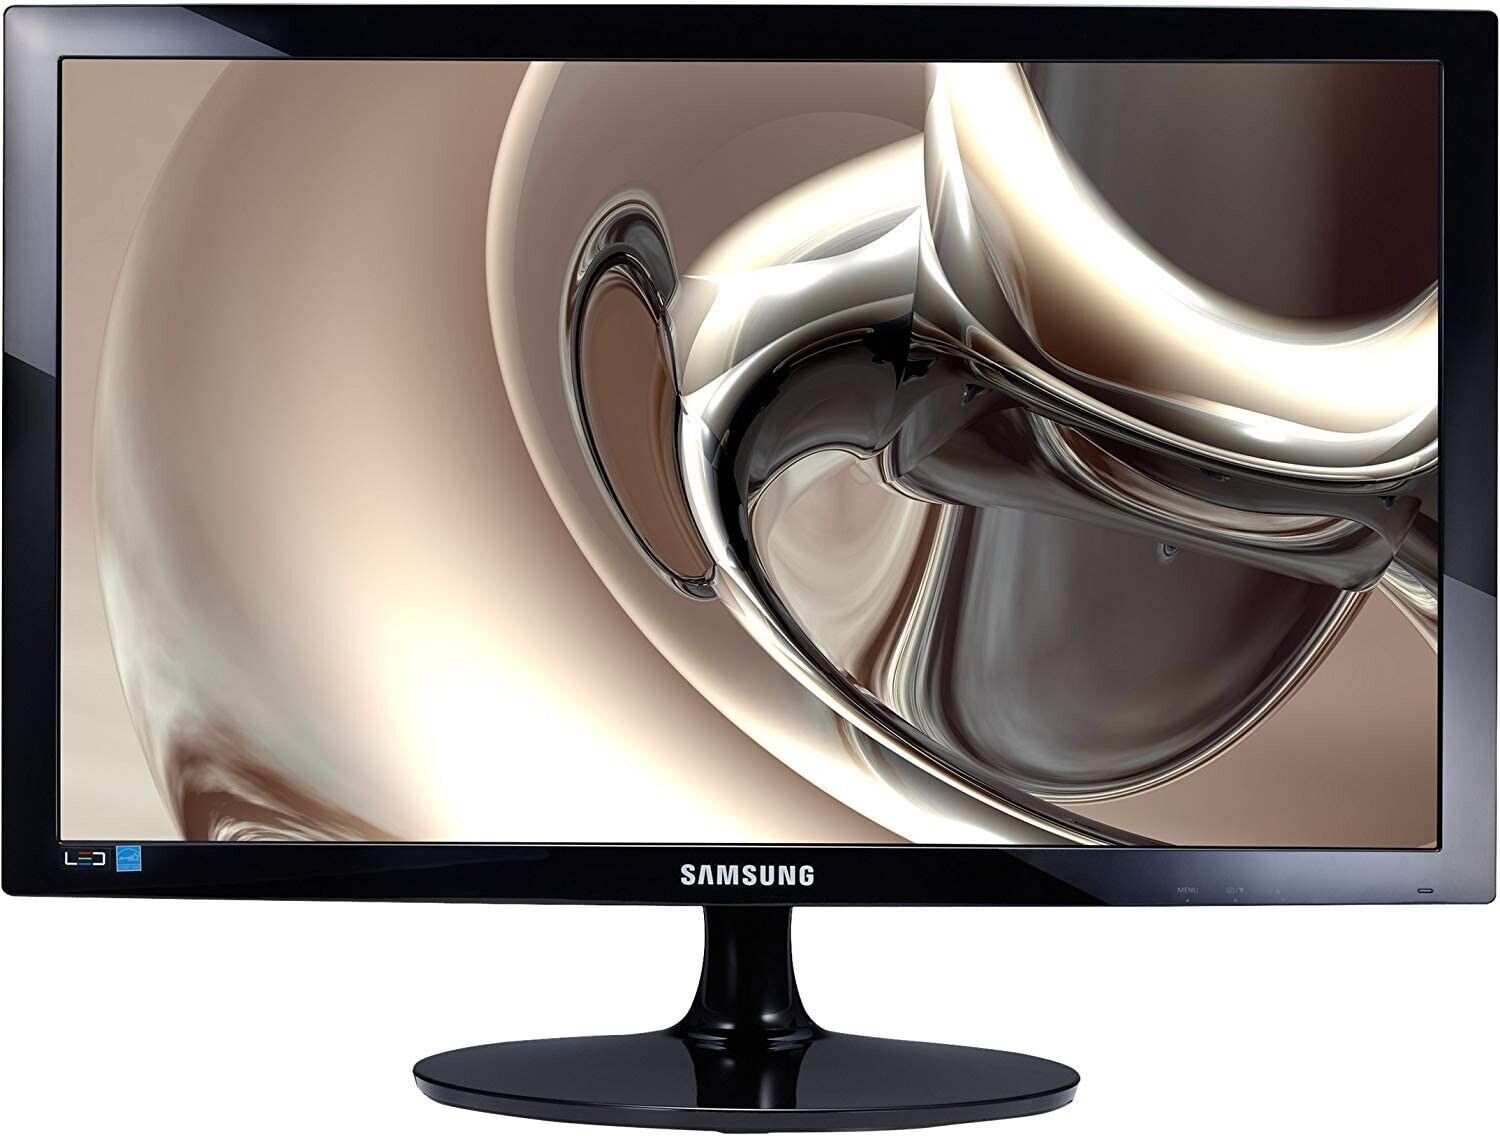 Samsung Simple LED 21.5 Monitor with High Glossy Finish (S22D300NY)  VGA PC